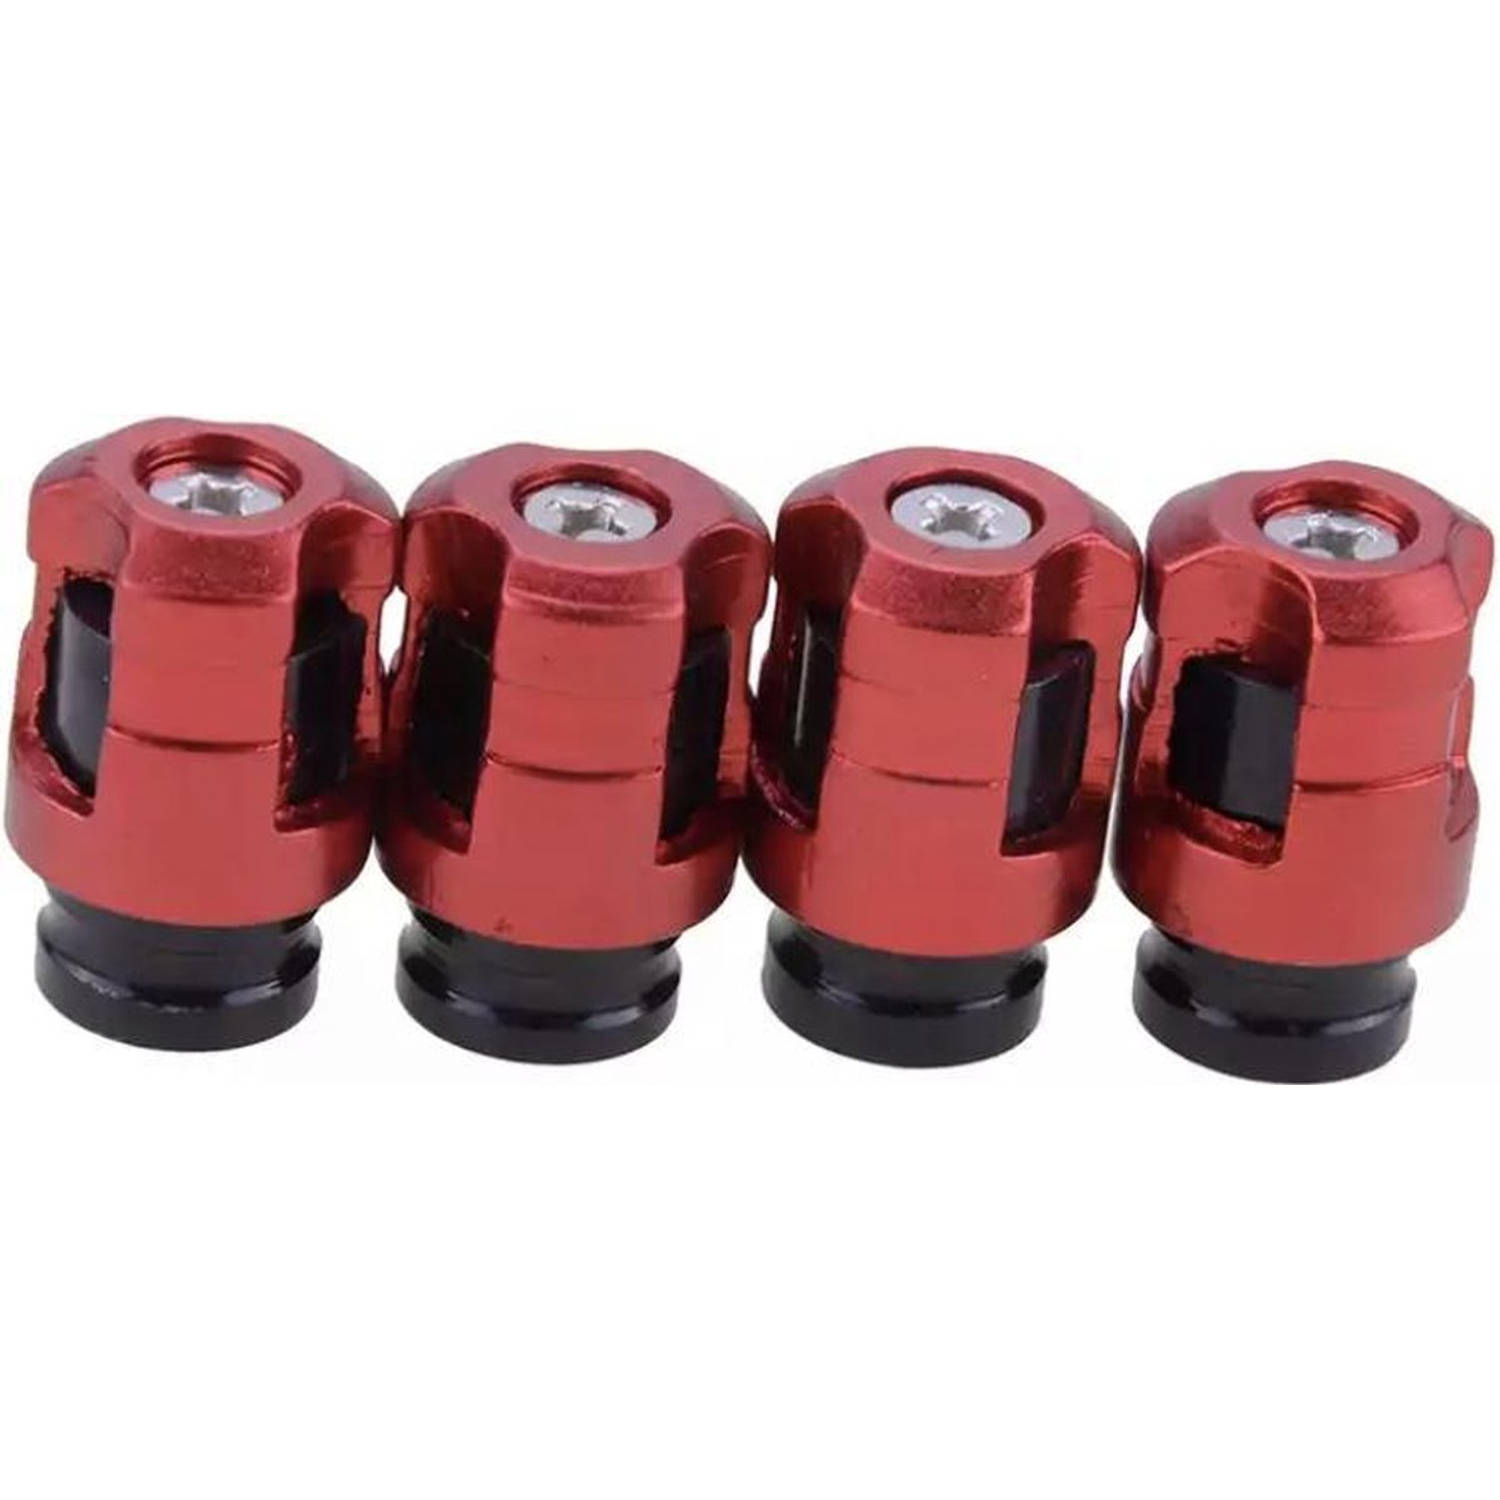 TT-products ventieldoppen Screw-on Red aluminium 4 stuks rood